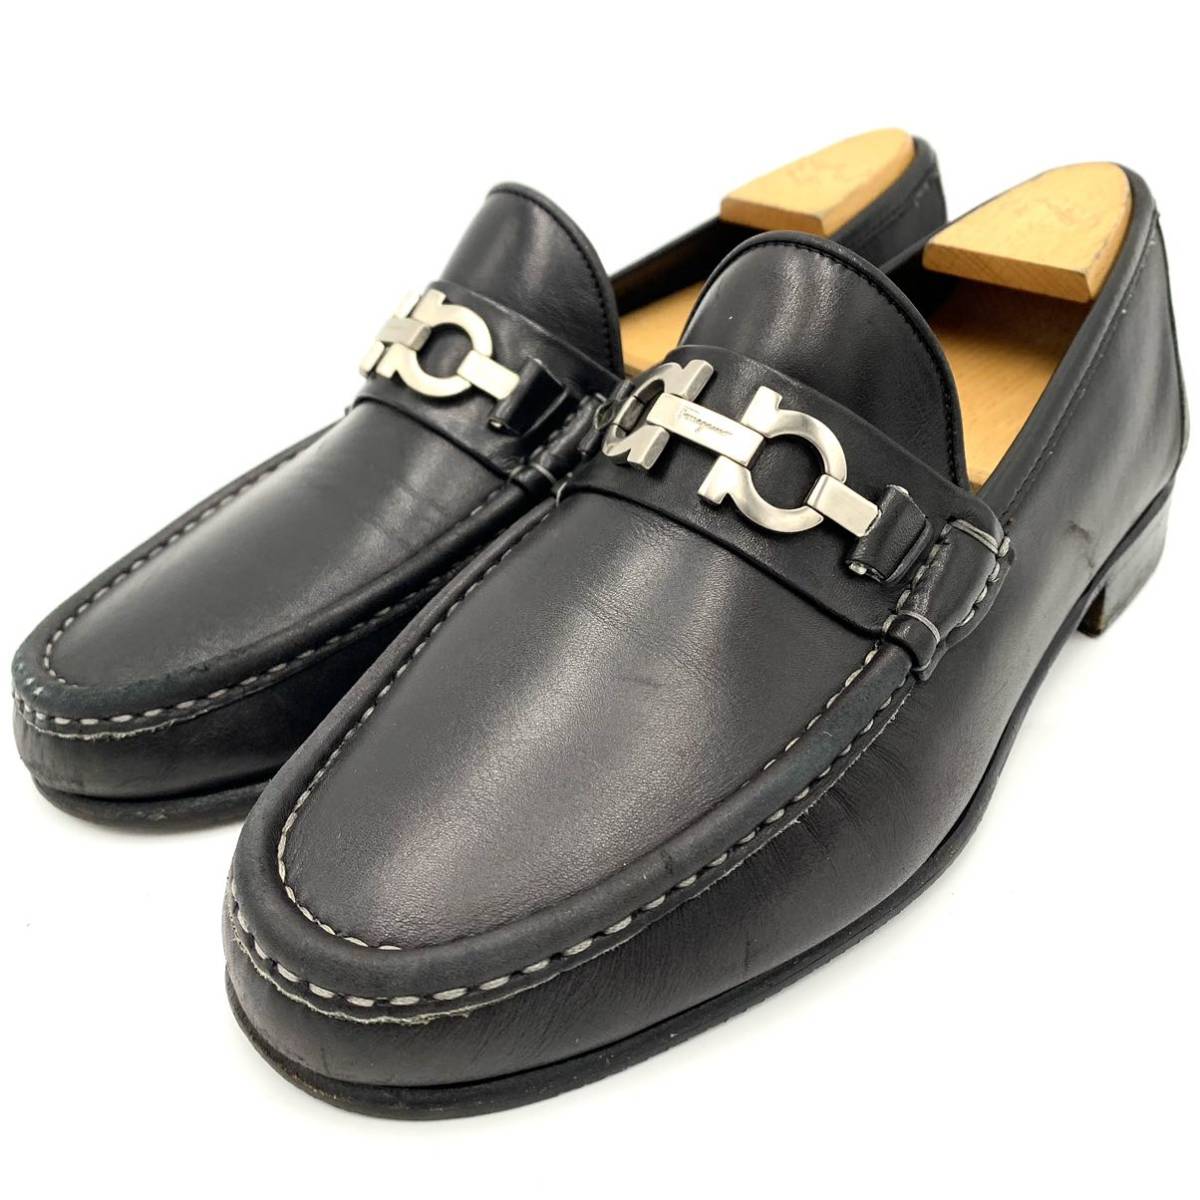 H☆ 高級紳士靴 'ガンチーニ型金具' Salvatore Ferragamo フェラガモ ビットローファー 革靴 ビジネス/ドレスシューズ 6.5EE 25.0cm 伊製